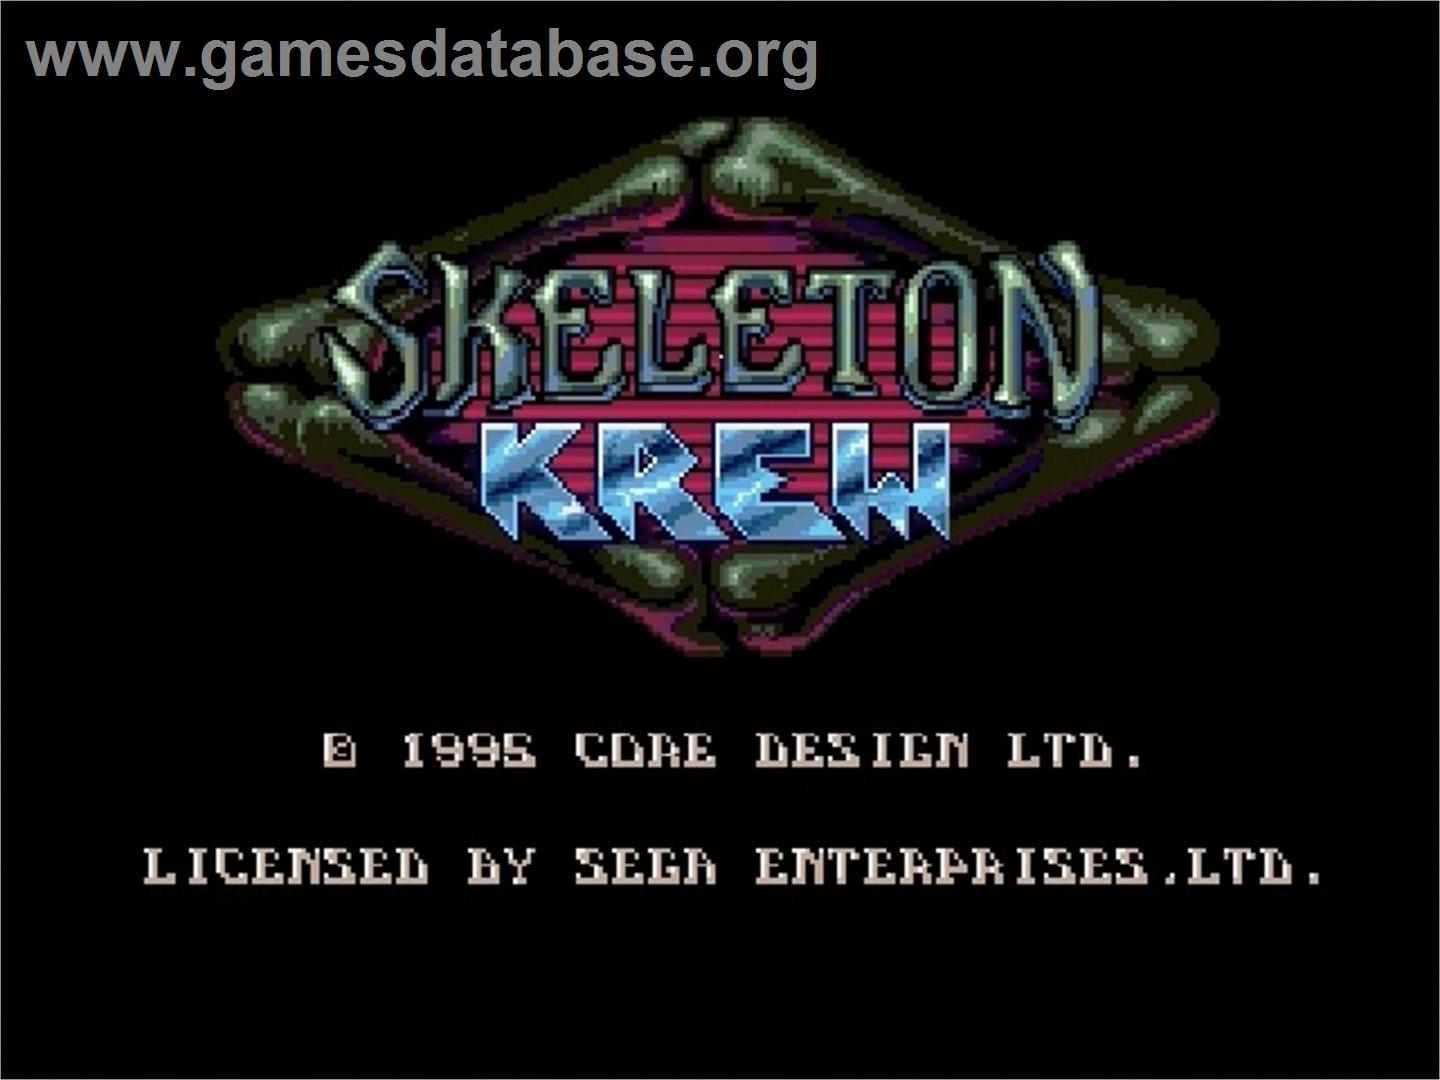 Skeleton Krew - Sega Genesis - Artwork - Title Screen